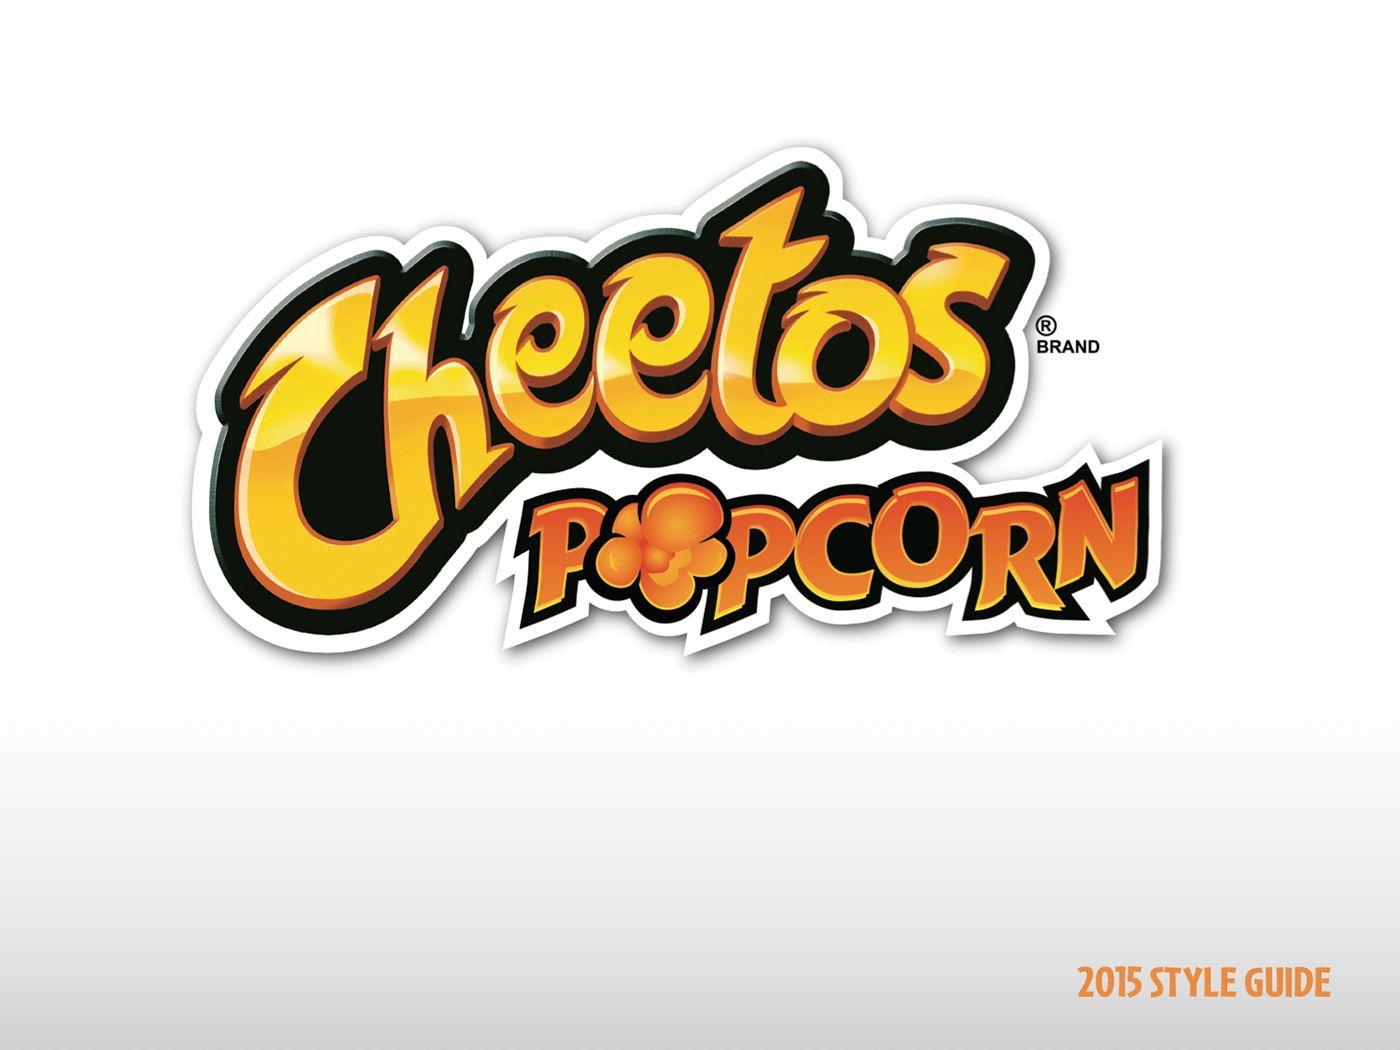 Popcorn Logo - CHEETOS POPCORN LOGO & STYLE GUIDE